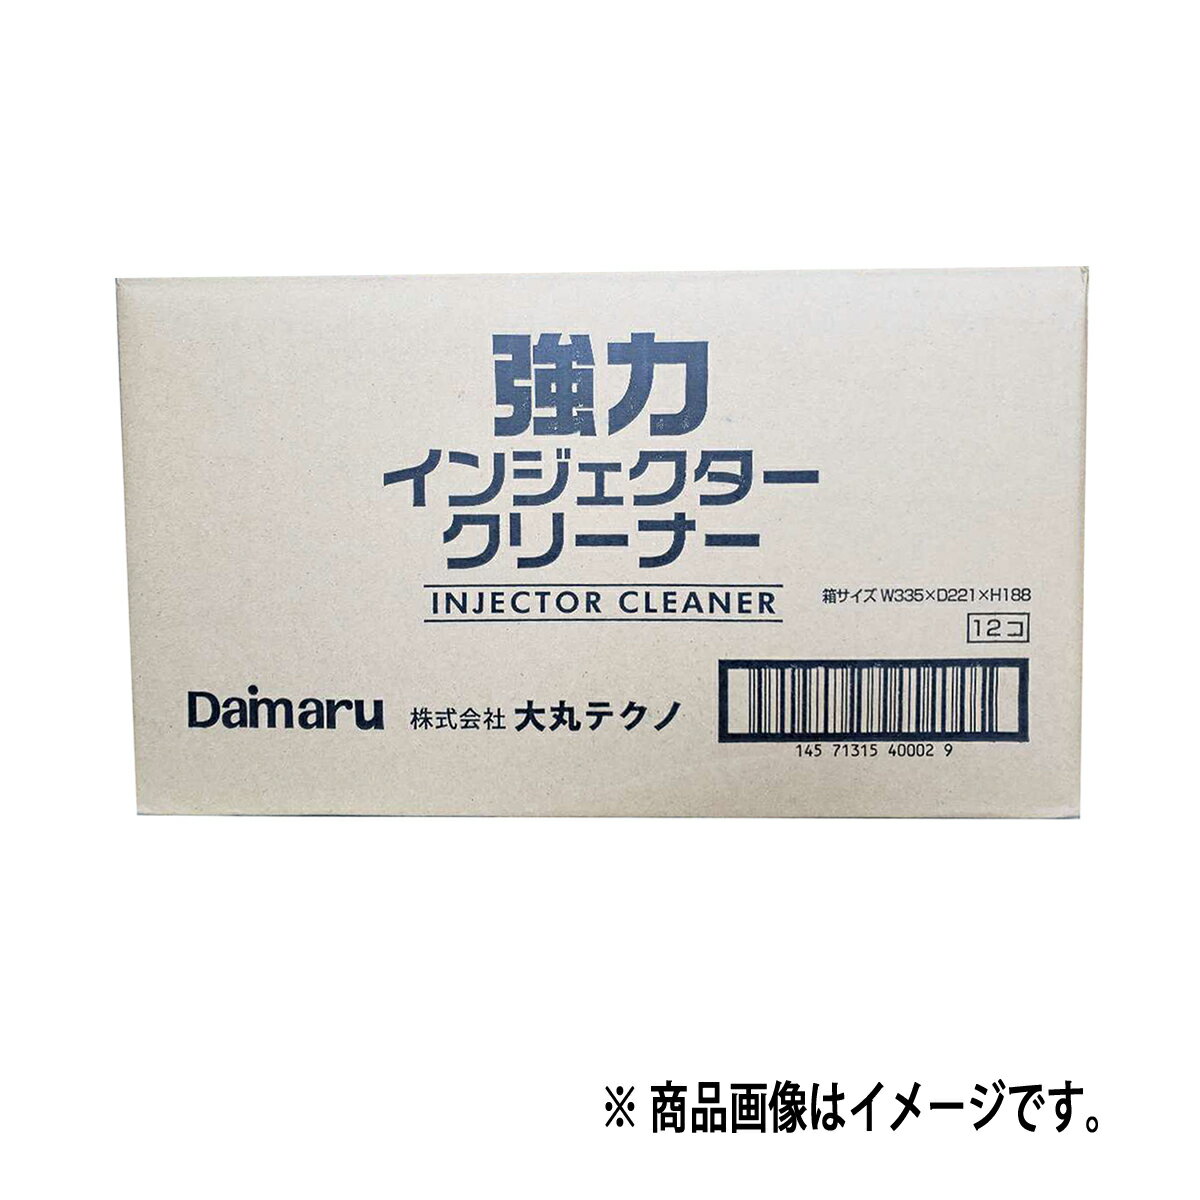 Daimaru IZ-120 強力インジェクタークリーナー 400ml コモンレールシステム車両用ディーゼル燃料添加剤 ケース(12個)販売 【送料無料】